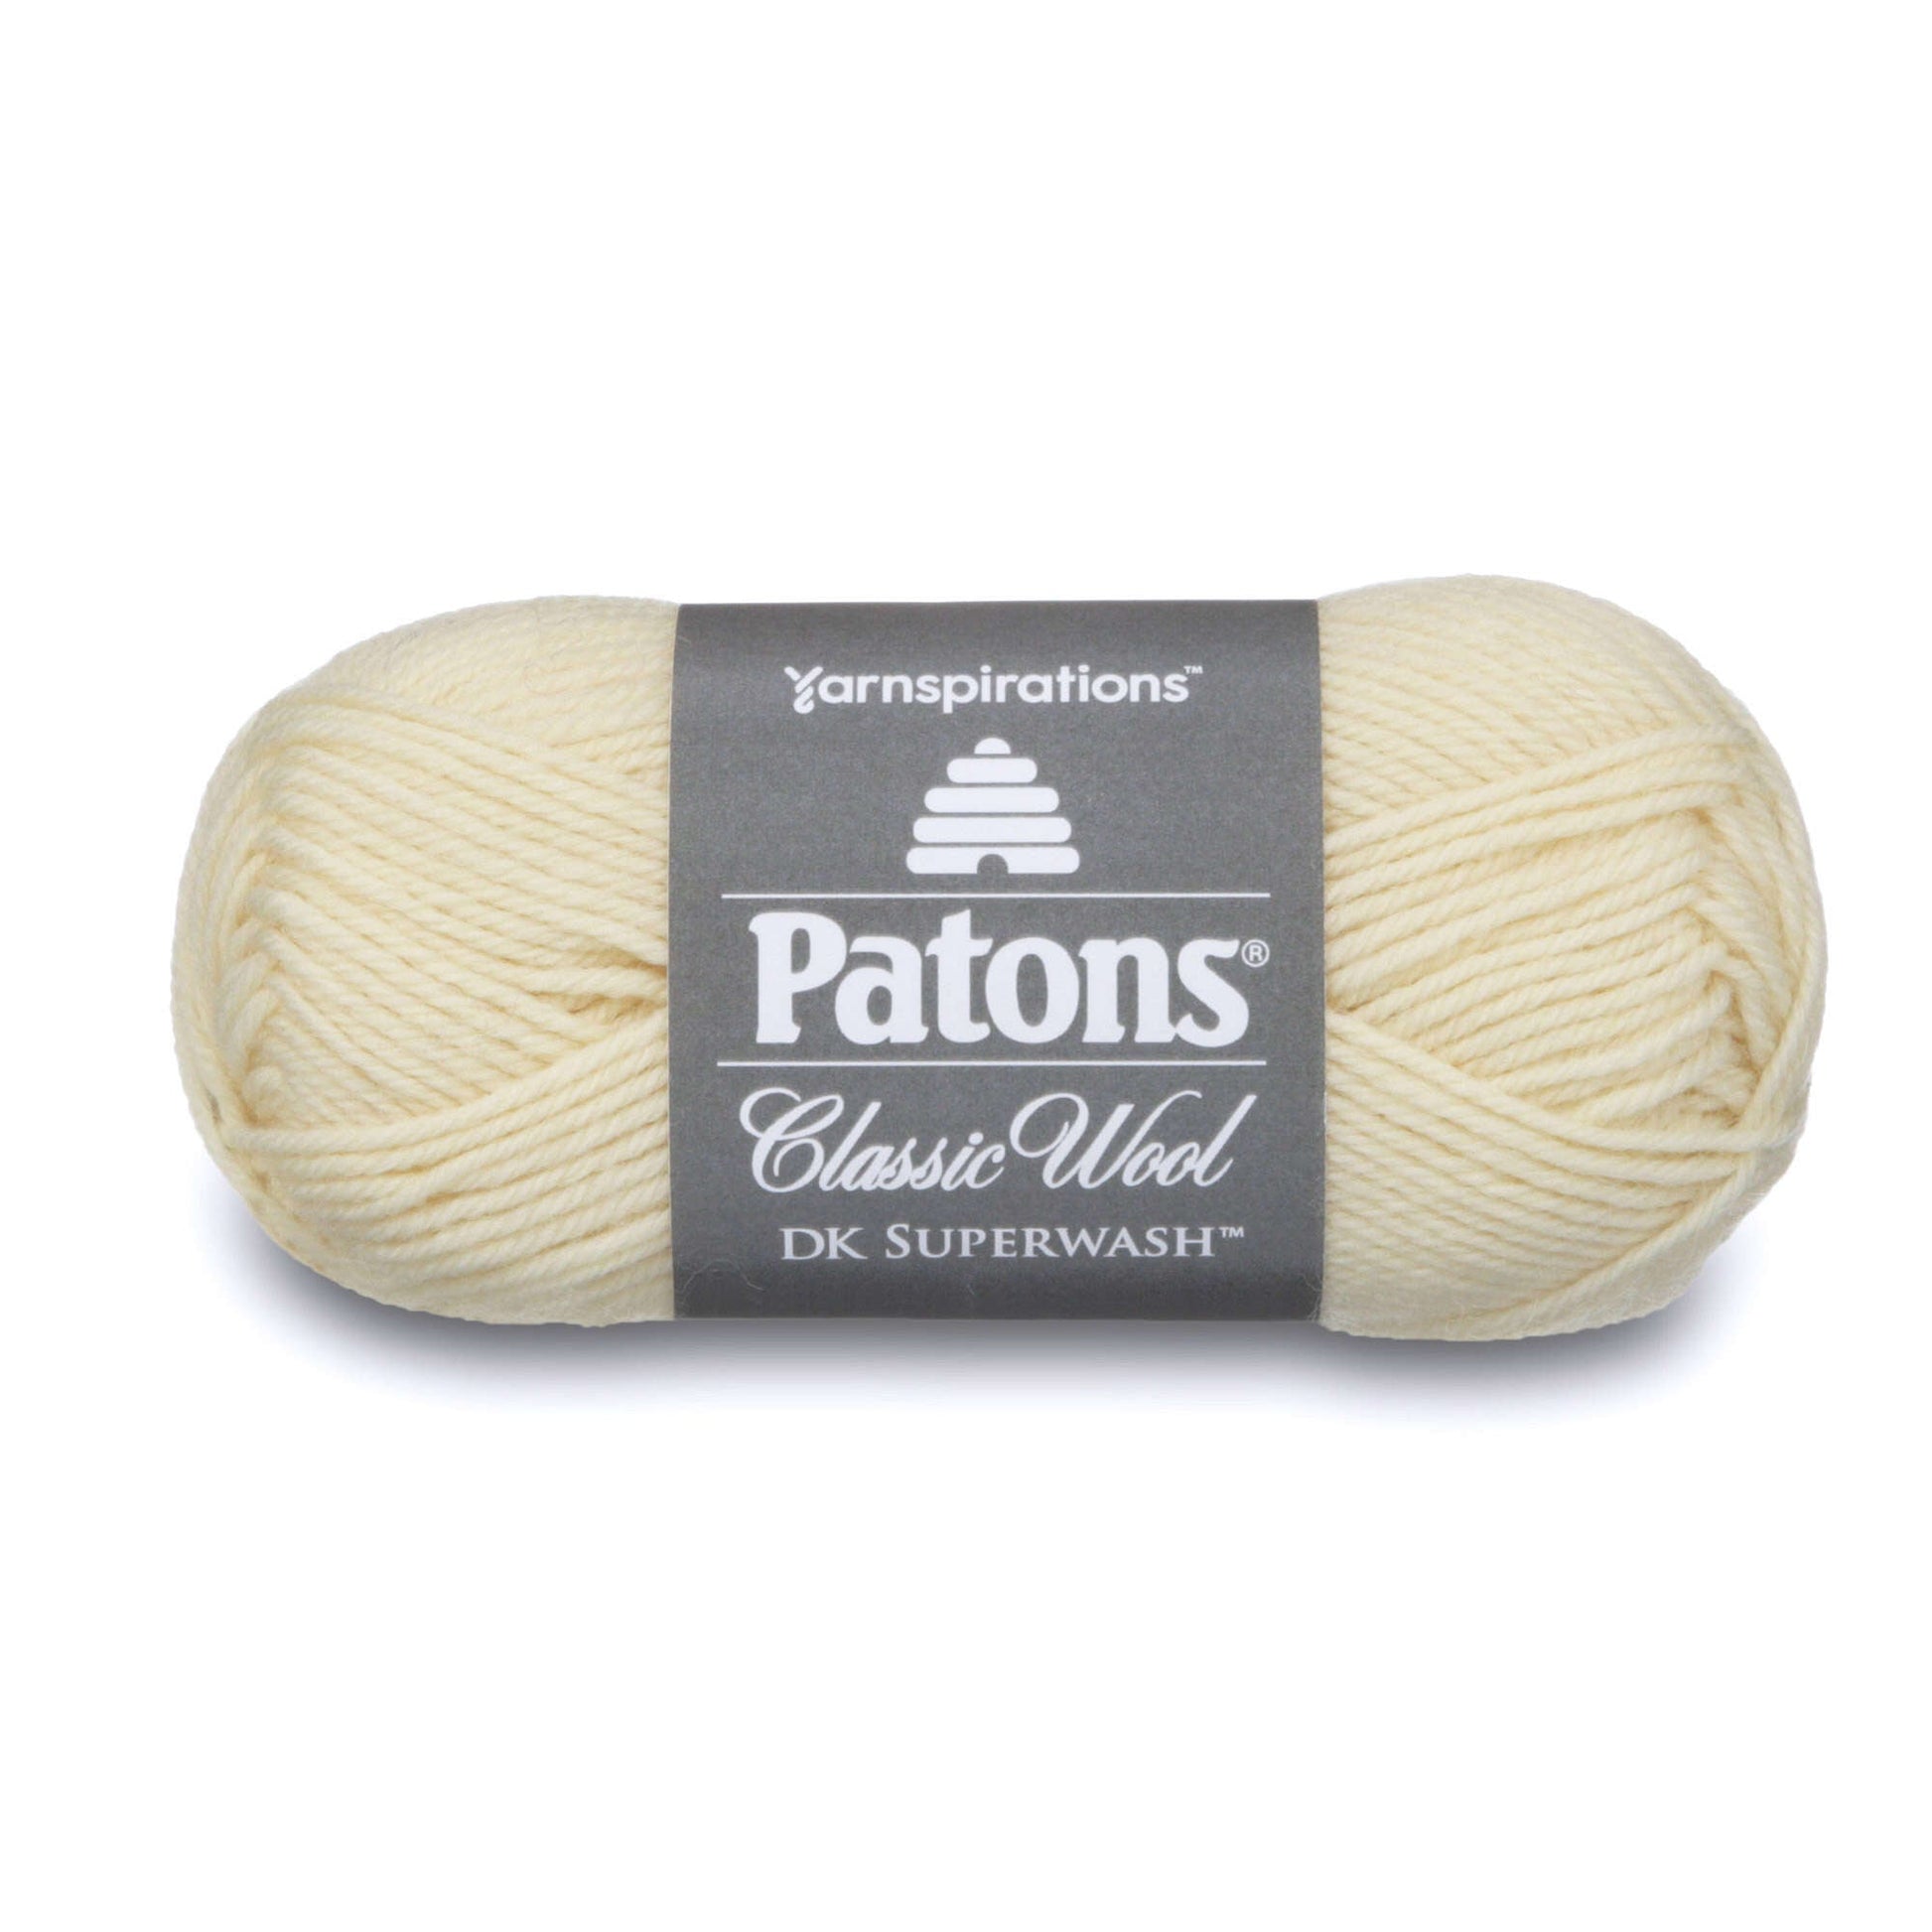 Patons Classic Wool DK Superwash Yarn Patons Classic Wool DK Superwash Yarn